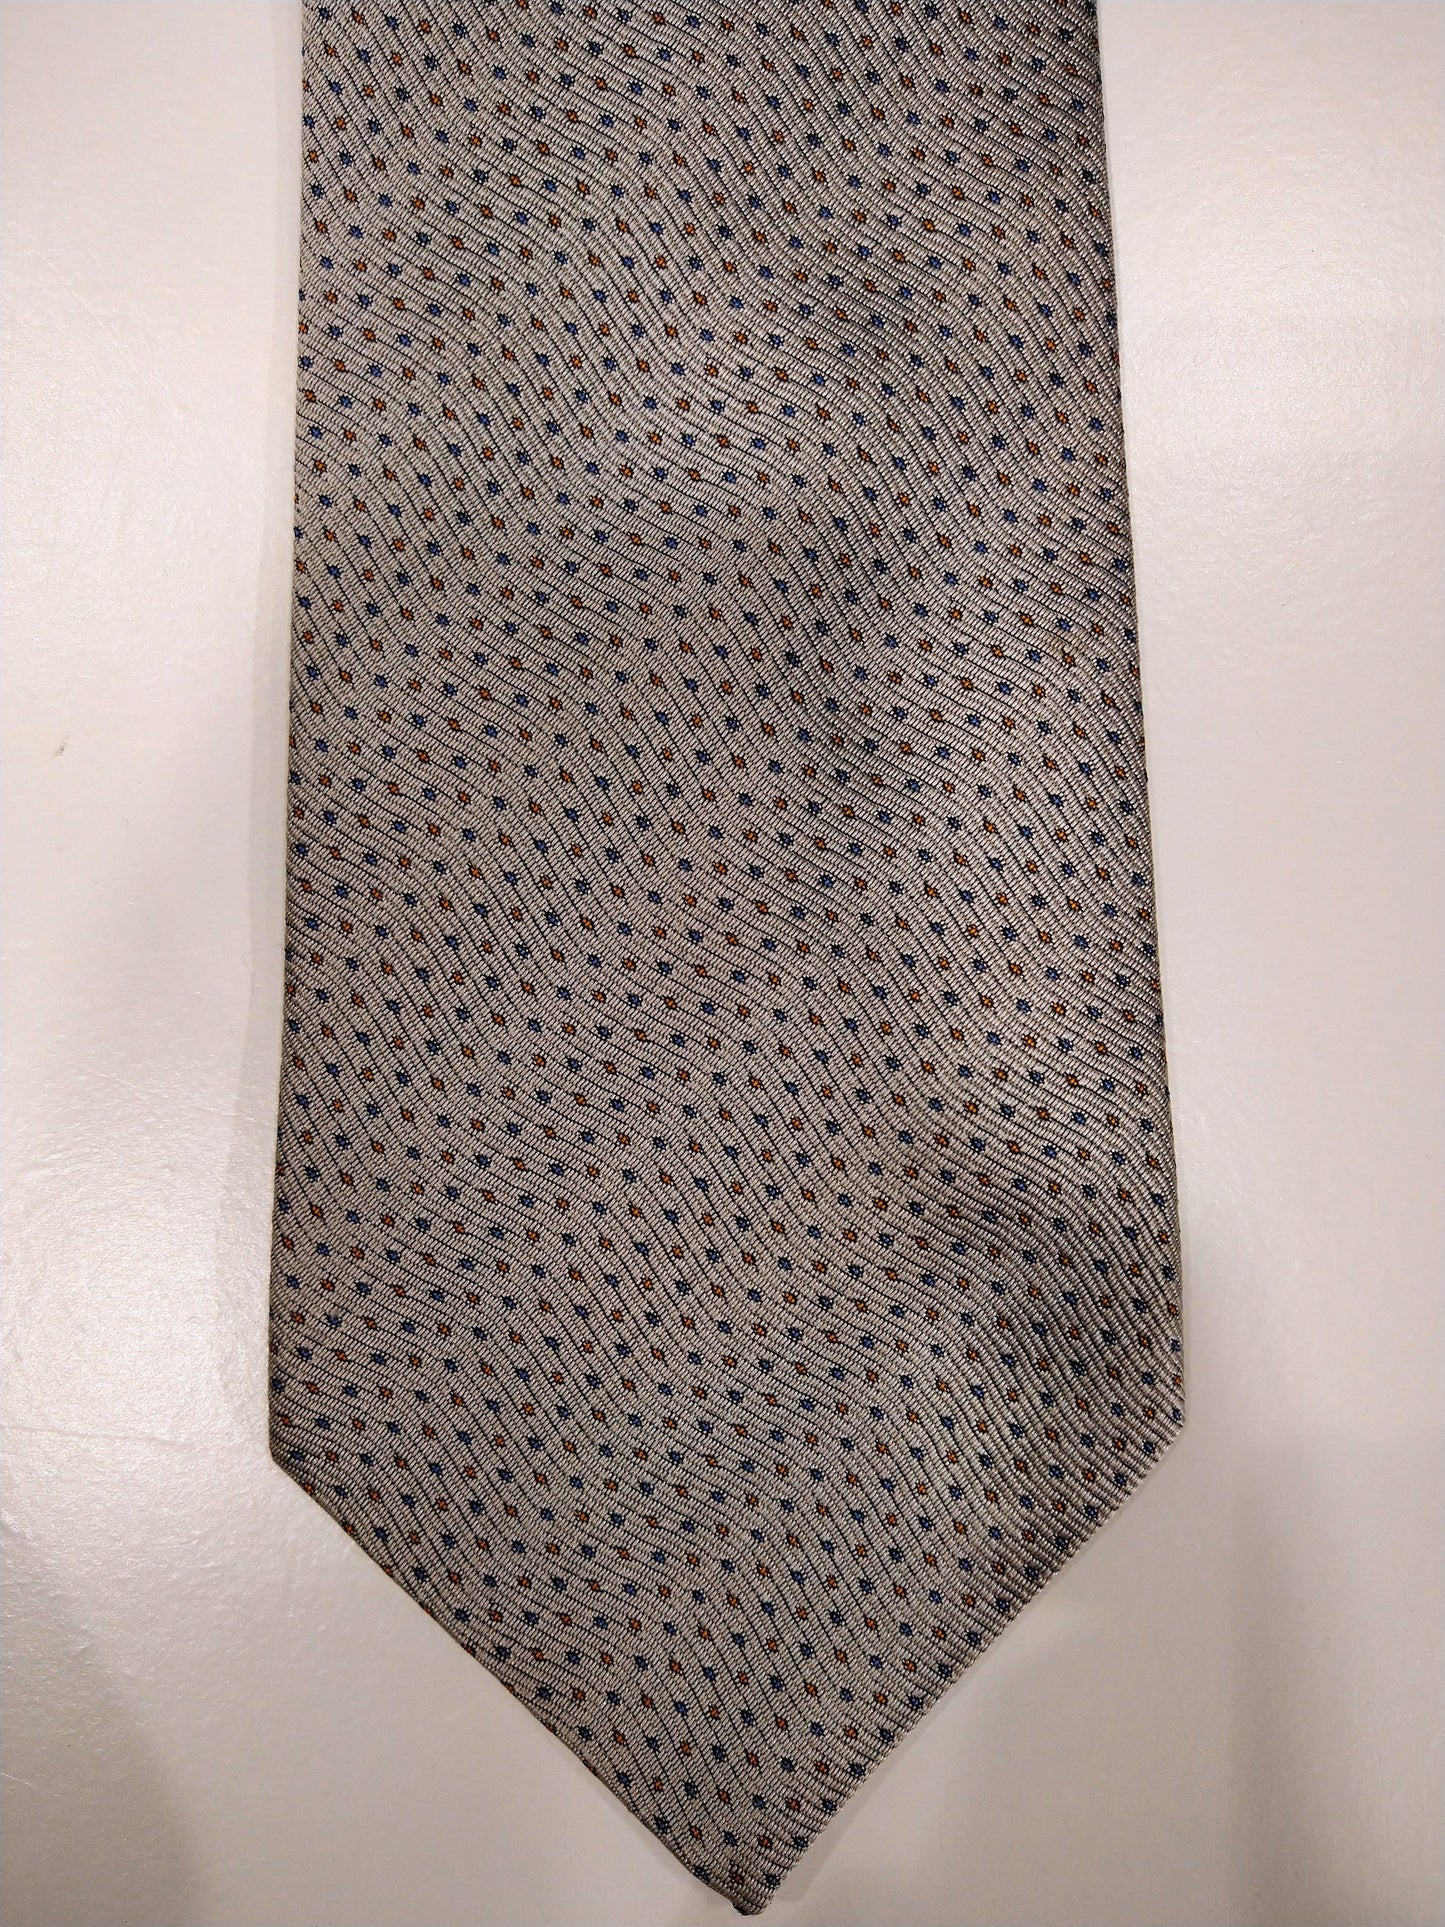 X-o-x-o uomo Italian design tie. Beige with blue / brown balls motif.